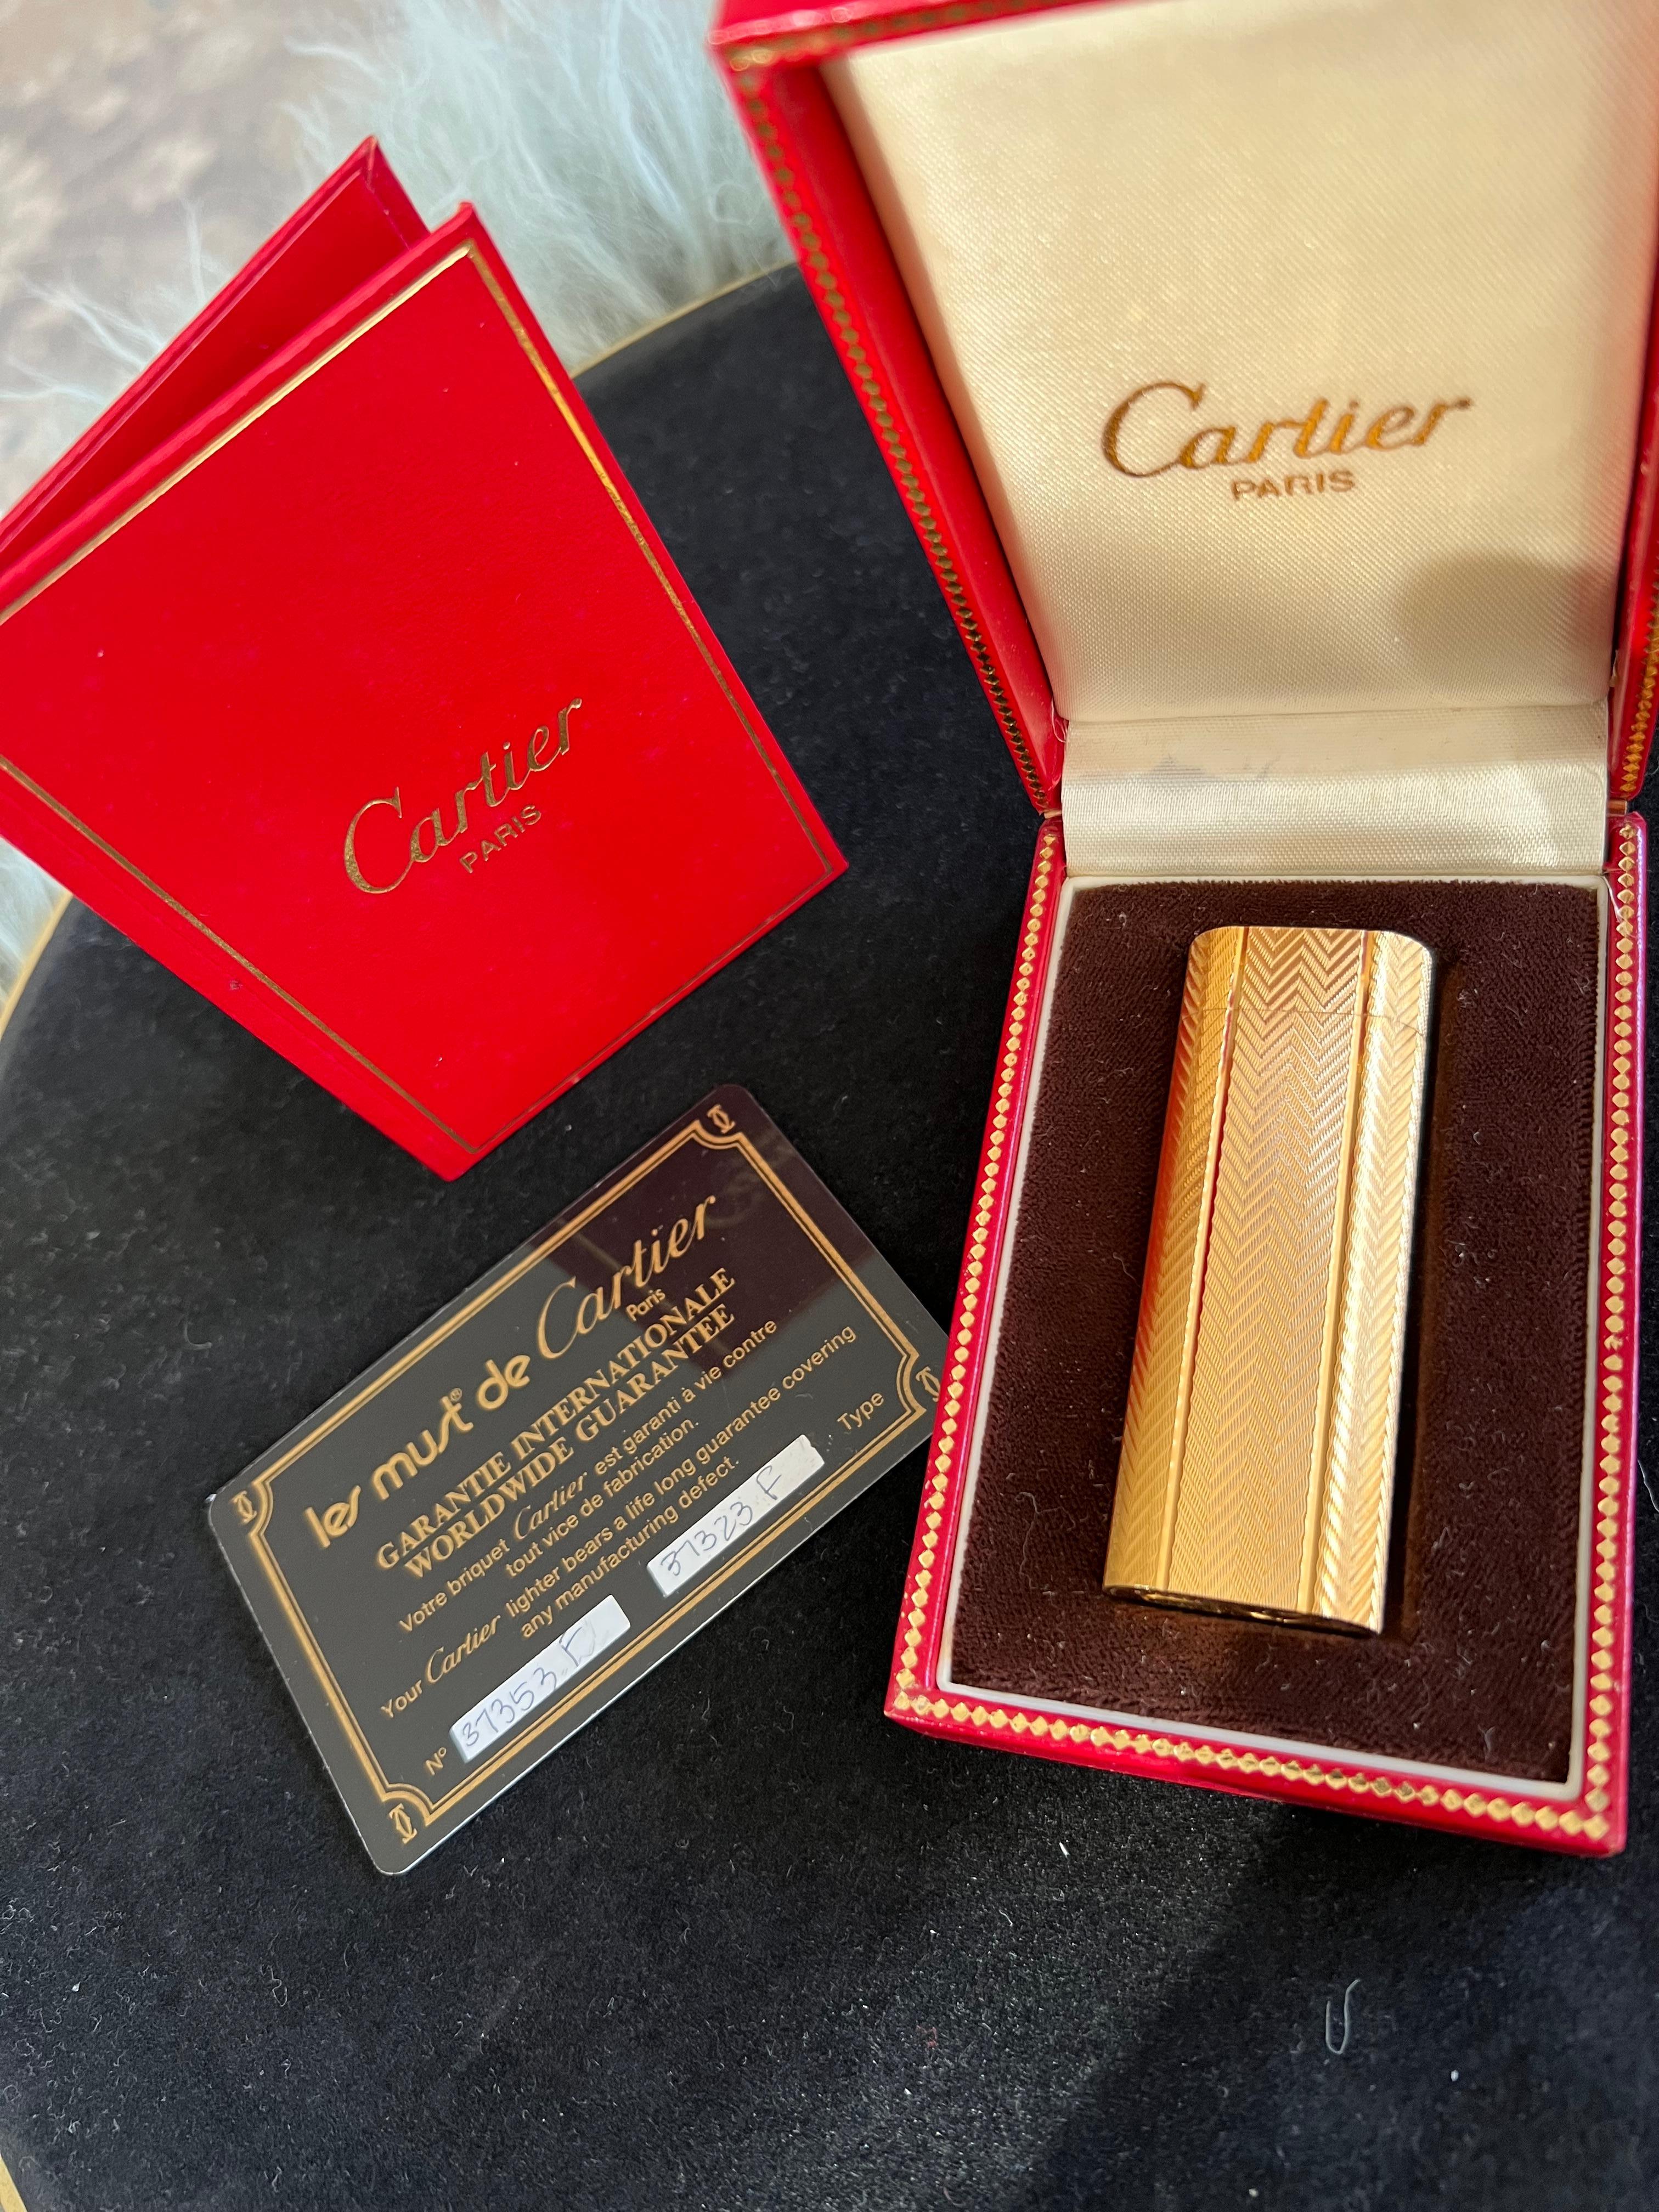 Les Must de Cartier Paris 18k Gold Plated Lighter 6